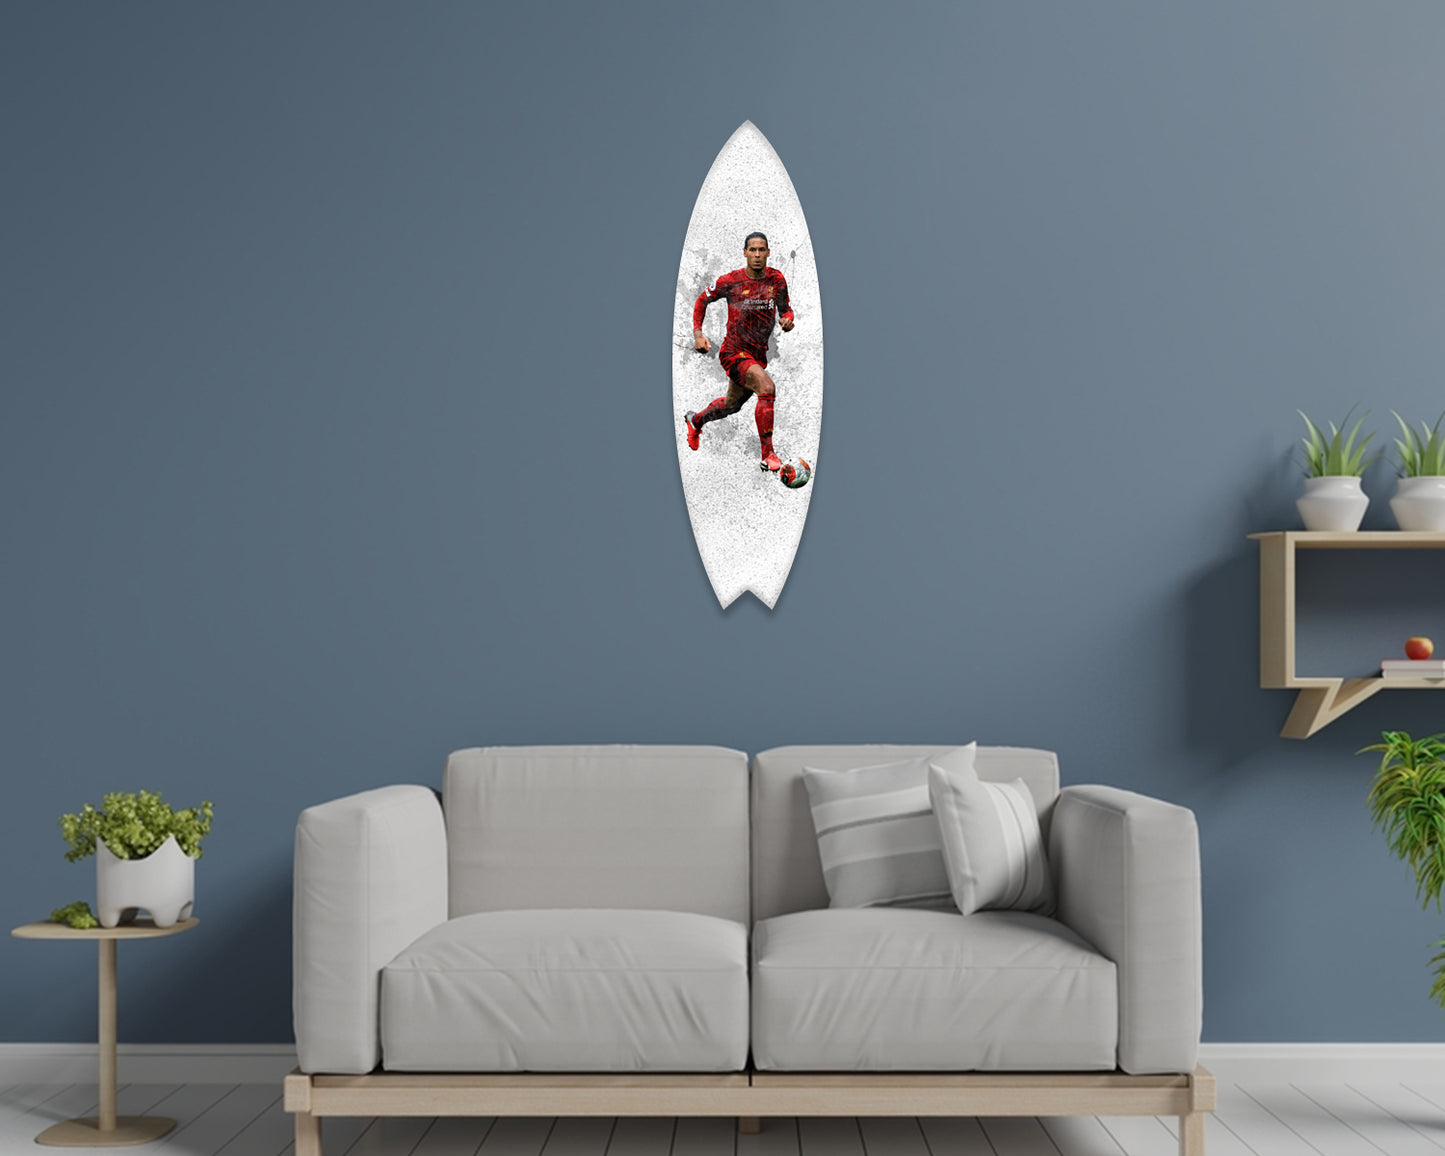 Virgil Van Dijk Acrylic Surfboard Wall Art 